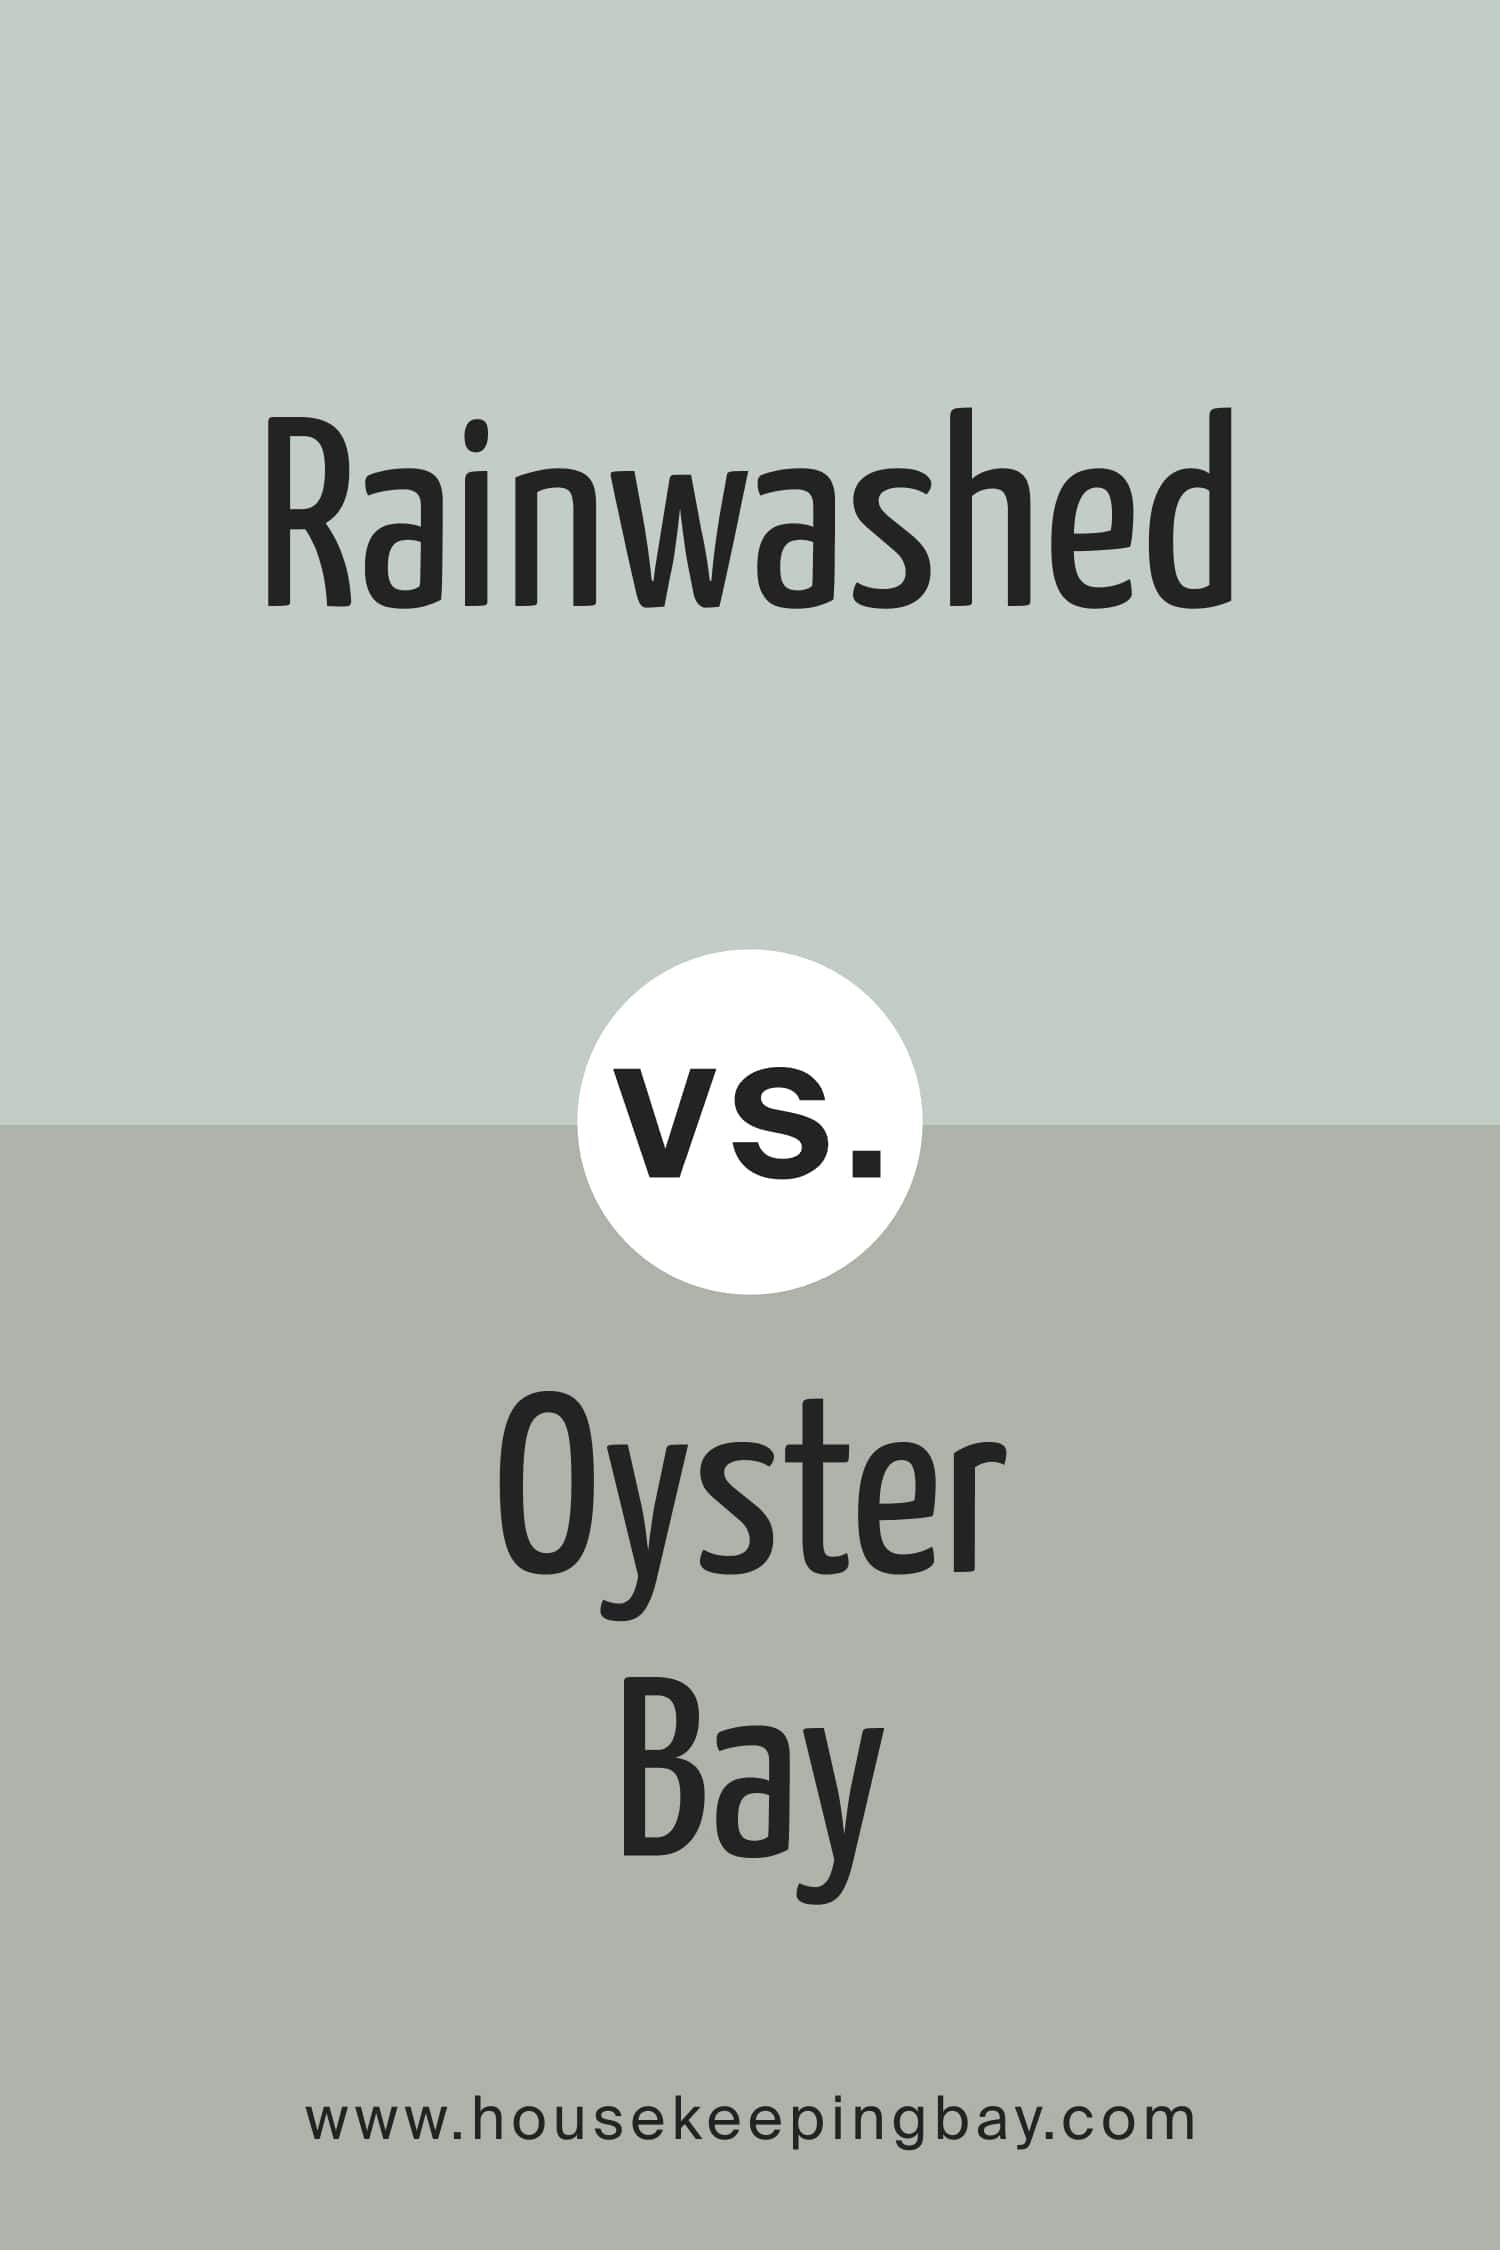 Rainwashed vs Oyster Bay